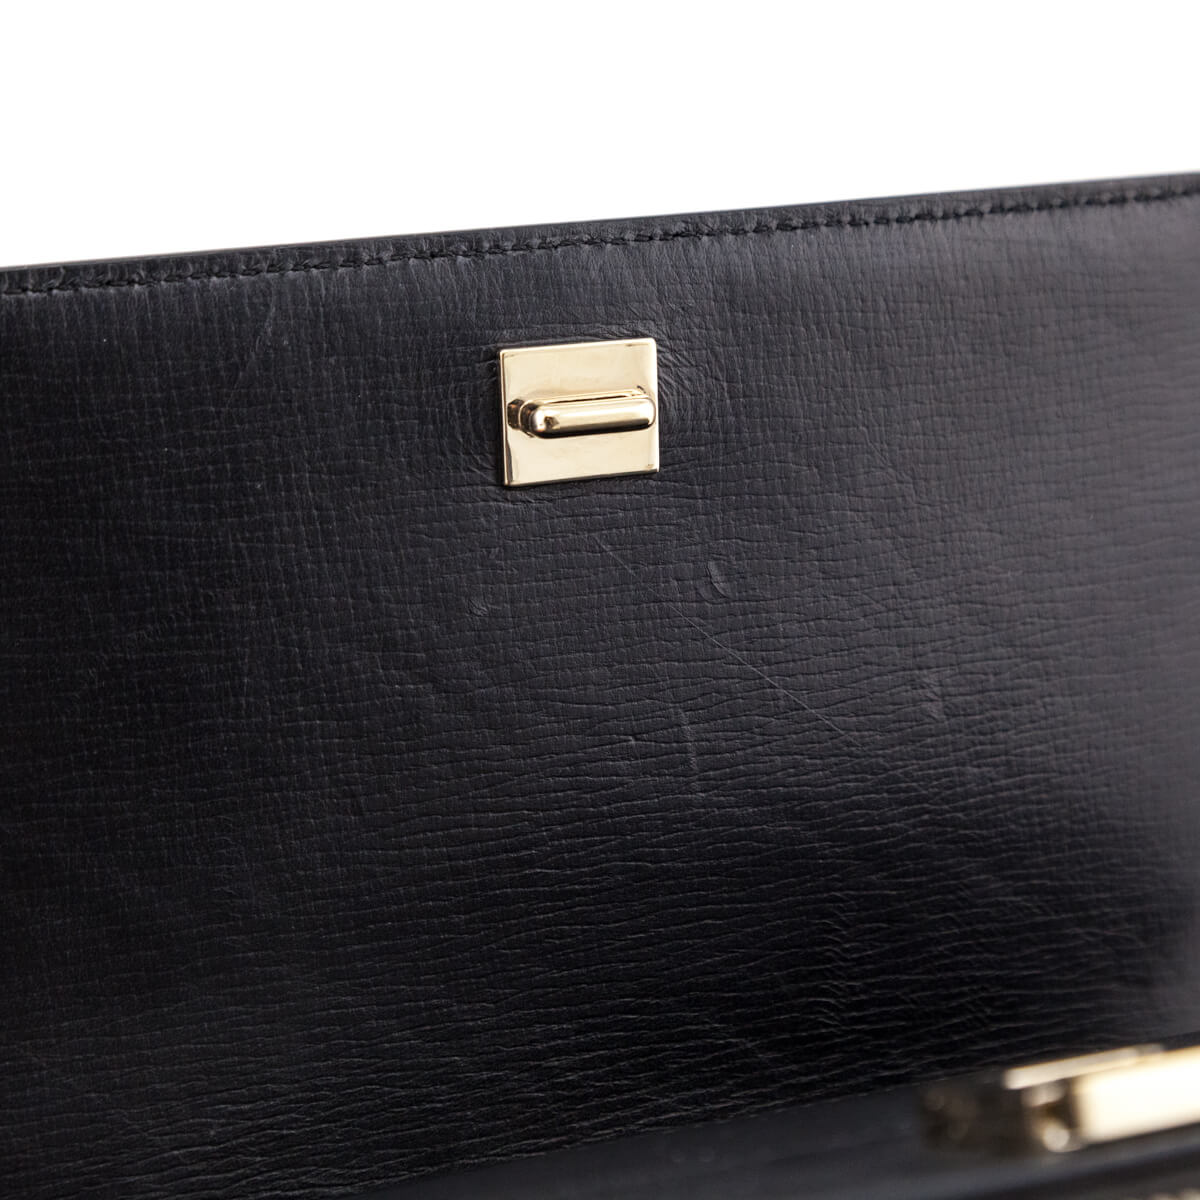 Givenchy Black Textured Calfskin Mini Pandora Box Bag - Love that Bag etc - Preowned Authentic Designer Handbags & Preloved Fashions